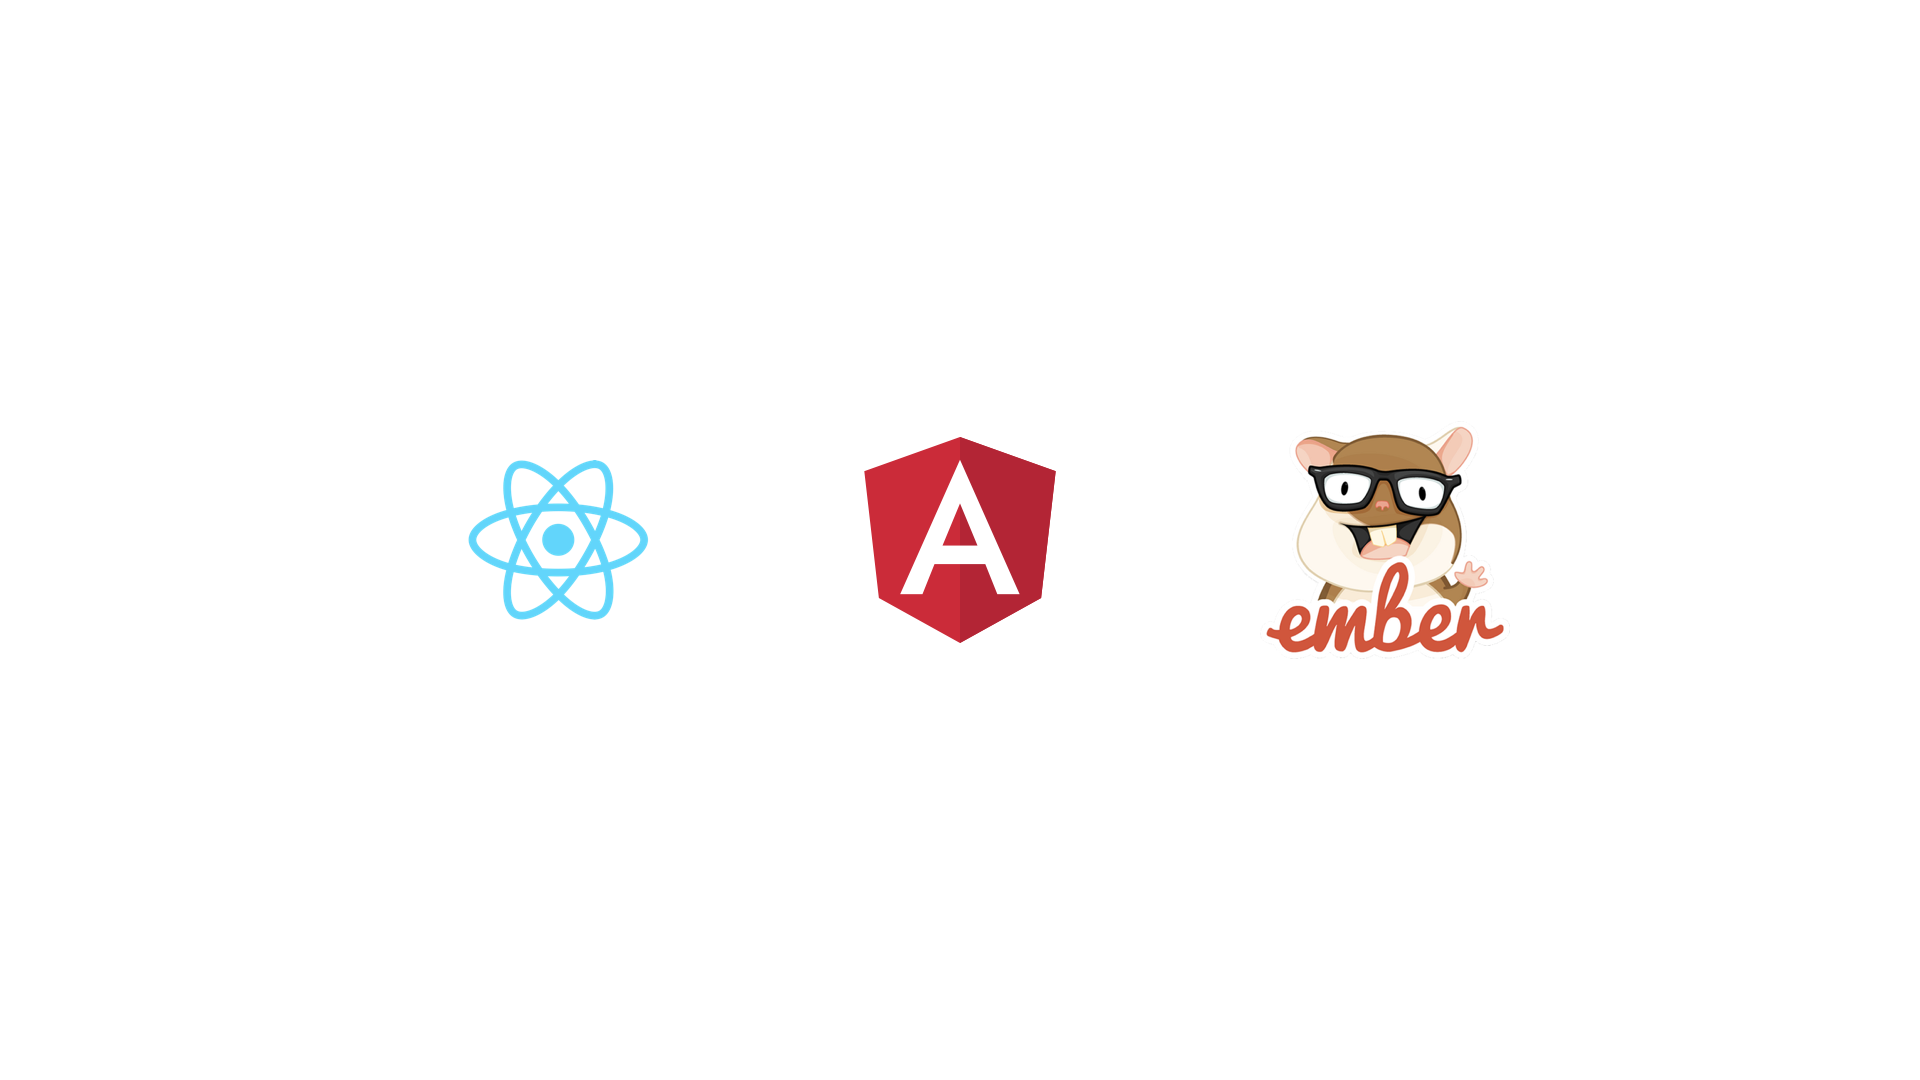 React, Angular and Ember logos